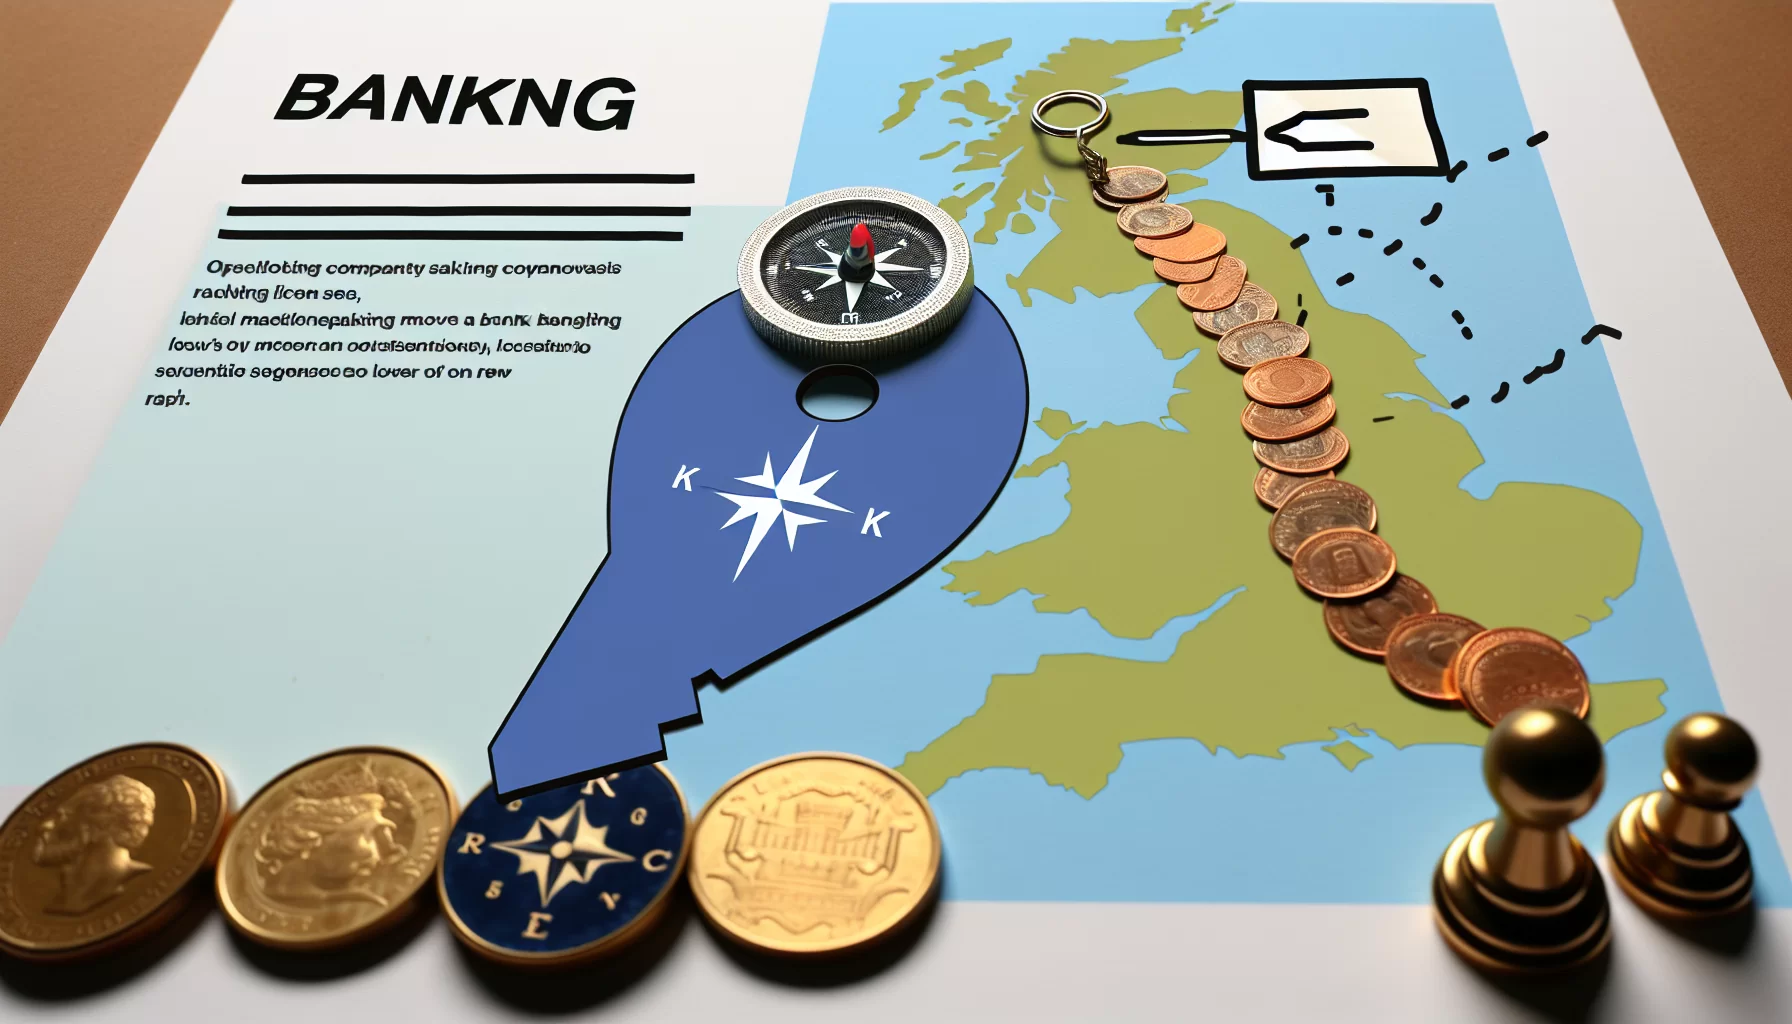 Revolut's strategic relocation: a major move toward securing UK banking license